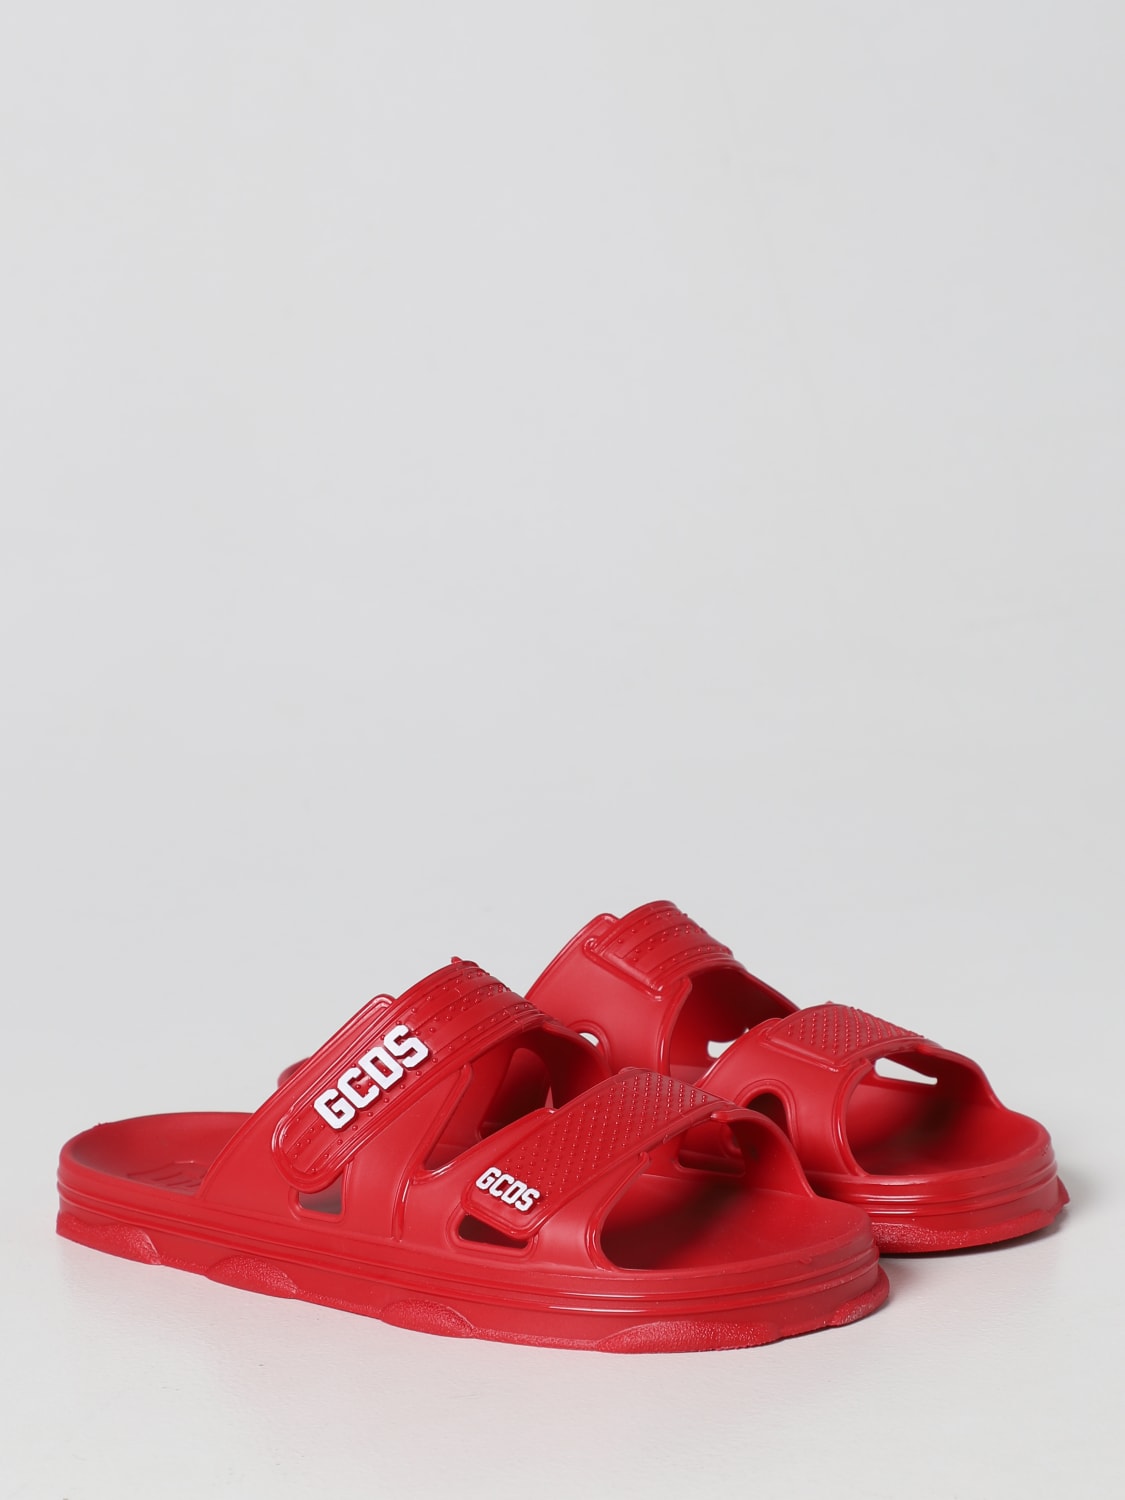 Gcds Women's Slides with Logo - Red - Flat Sandals - 41